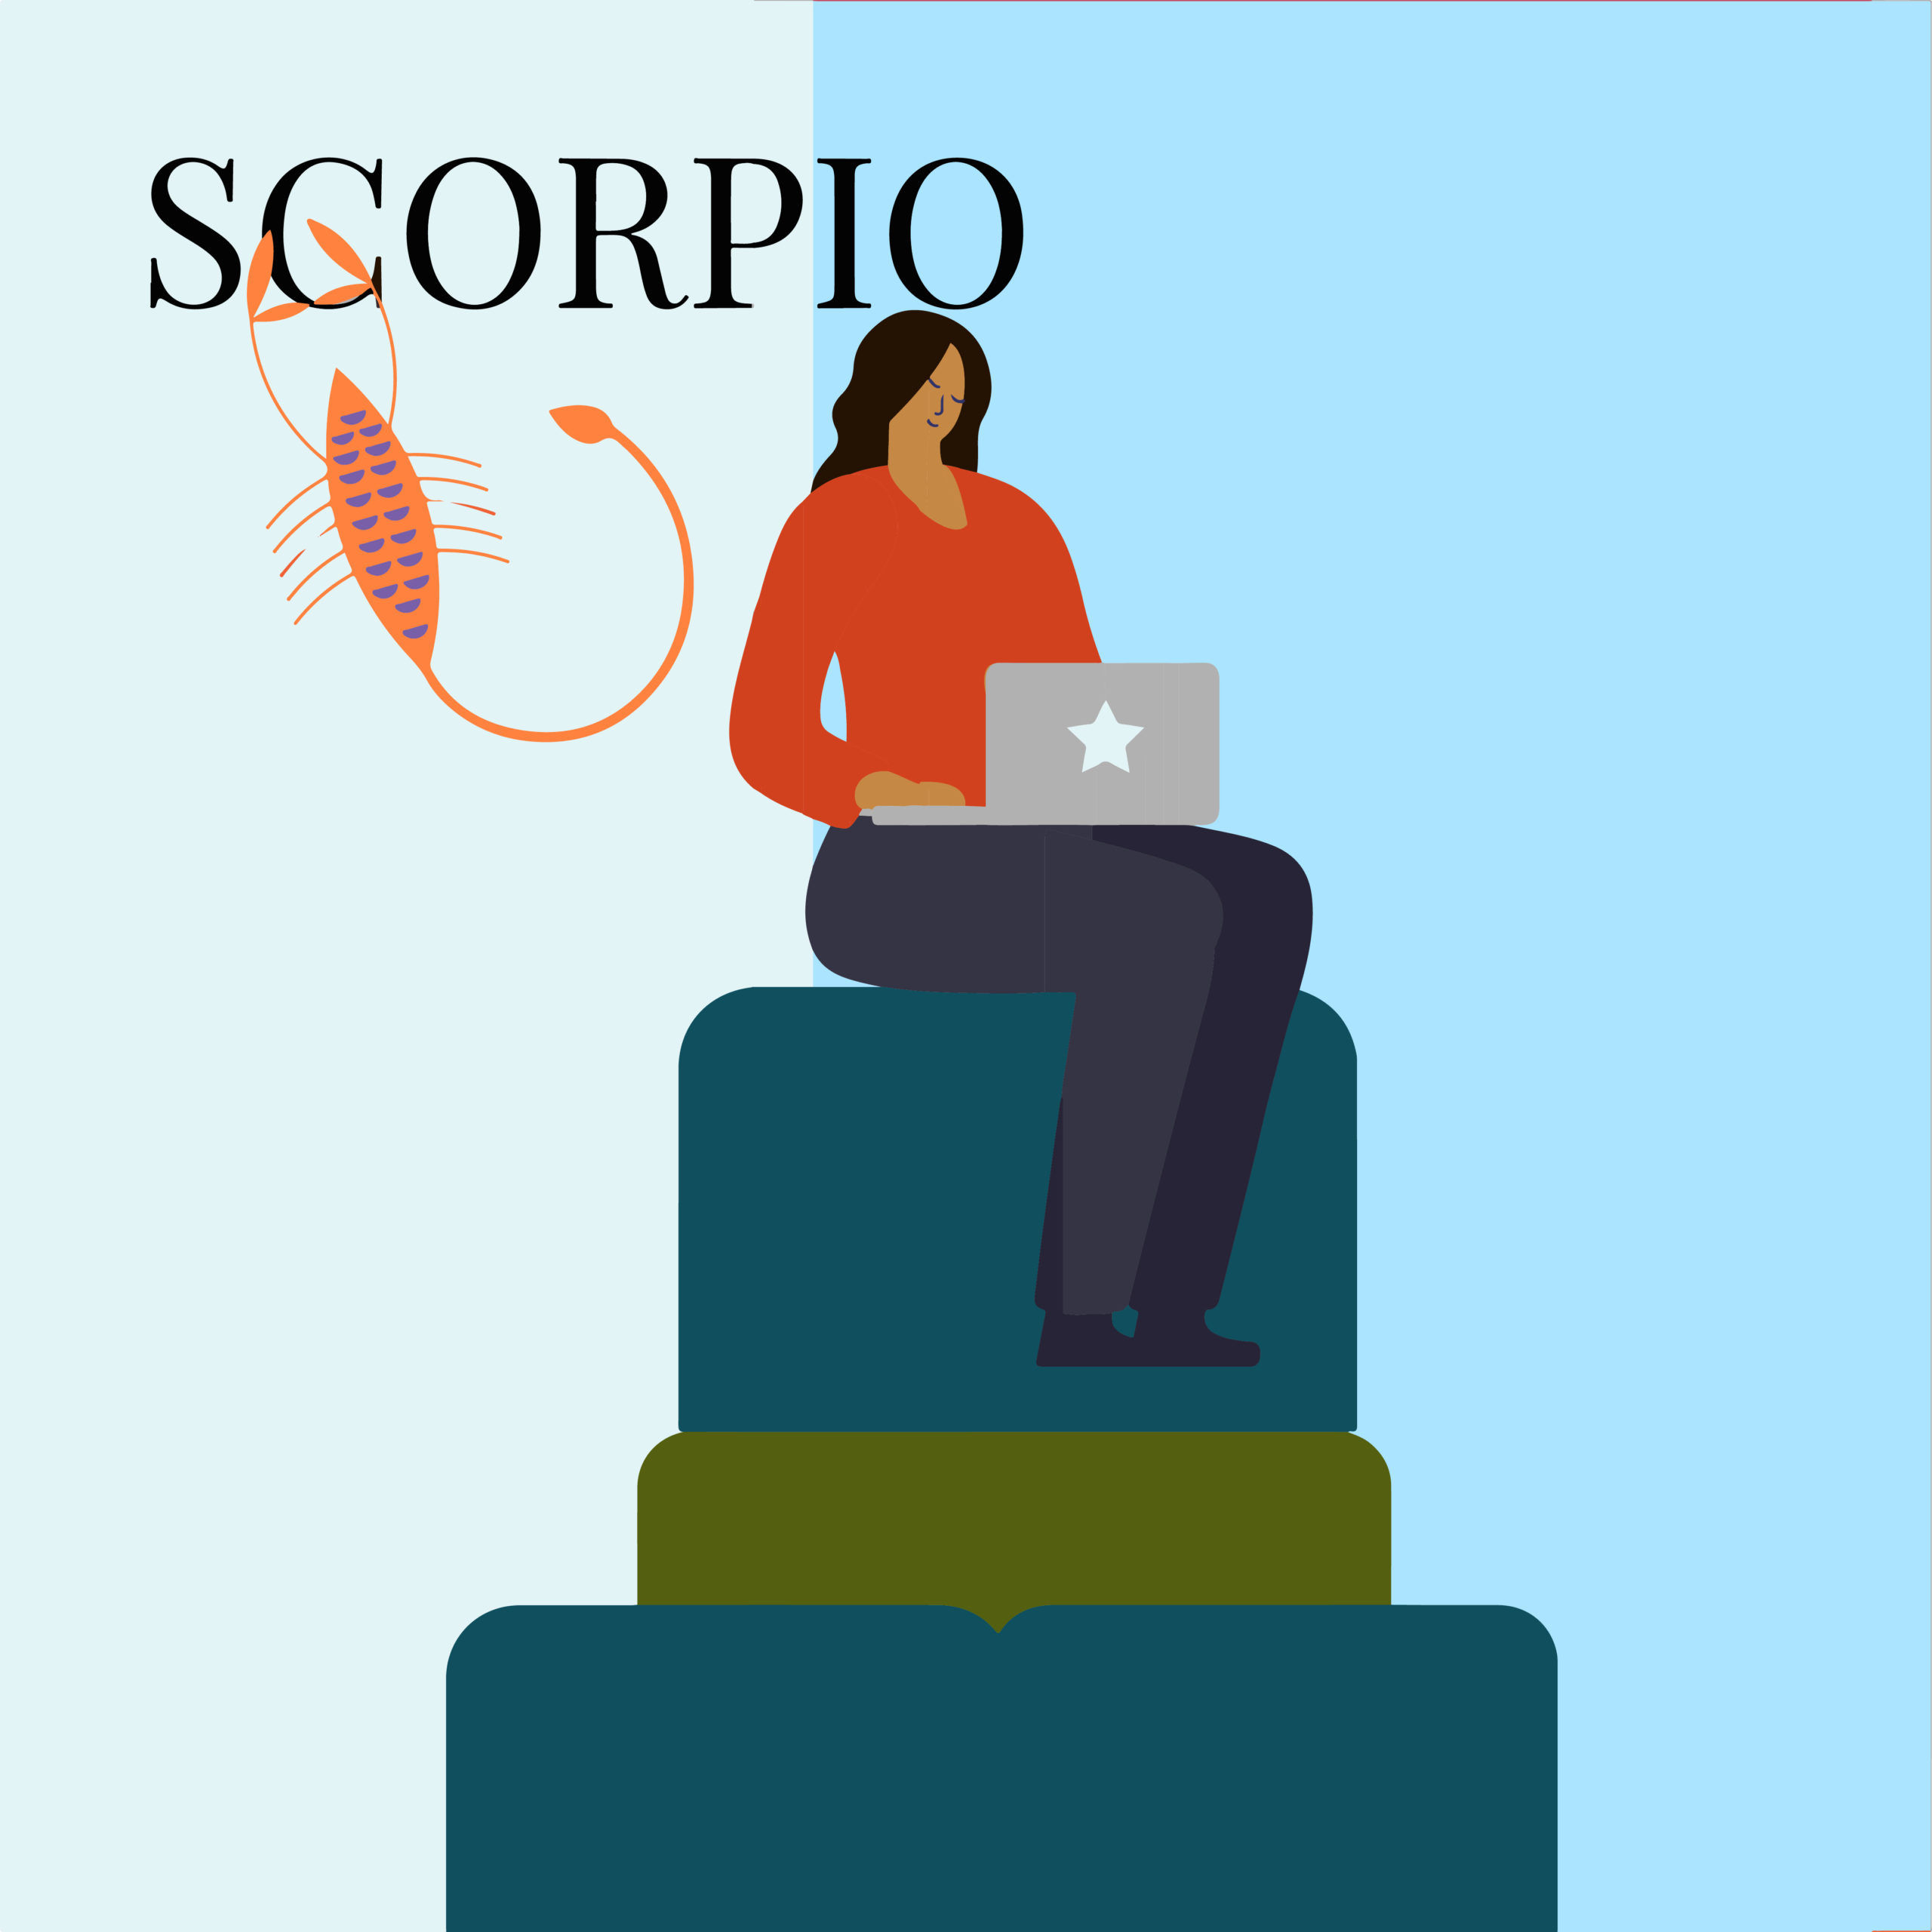 scorpio zodiac sign characteristics